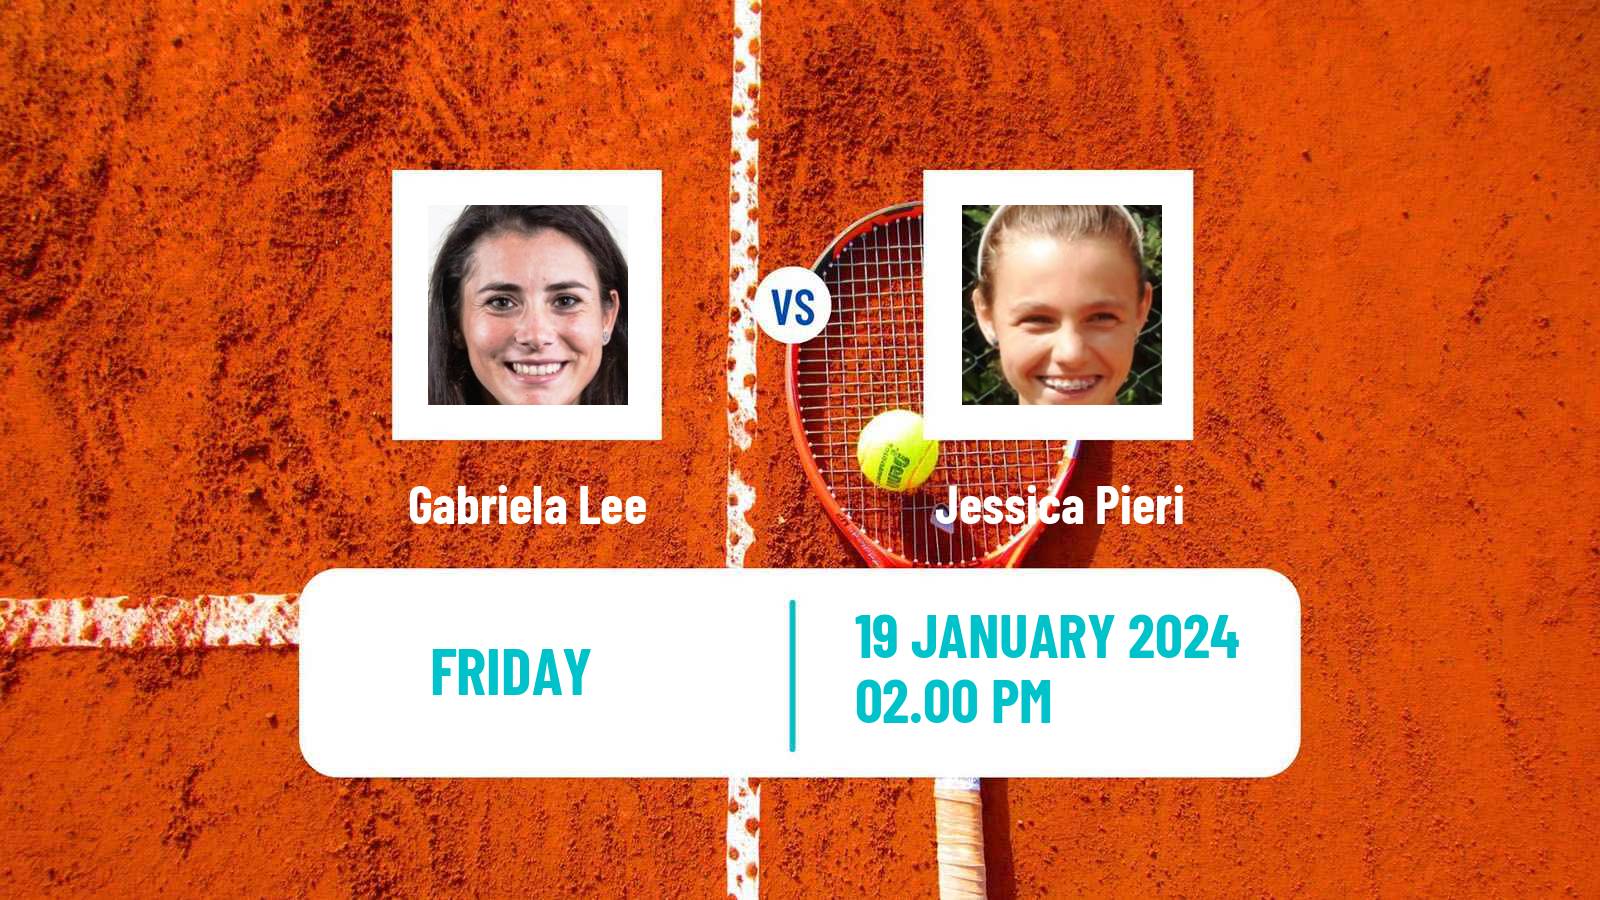 Tennis ITF W35 Naples Fl 2 Women Gabriela Lee - Jessica Pieri